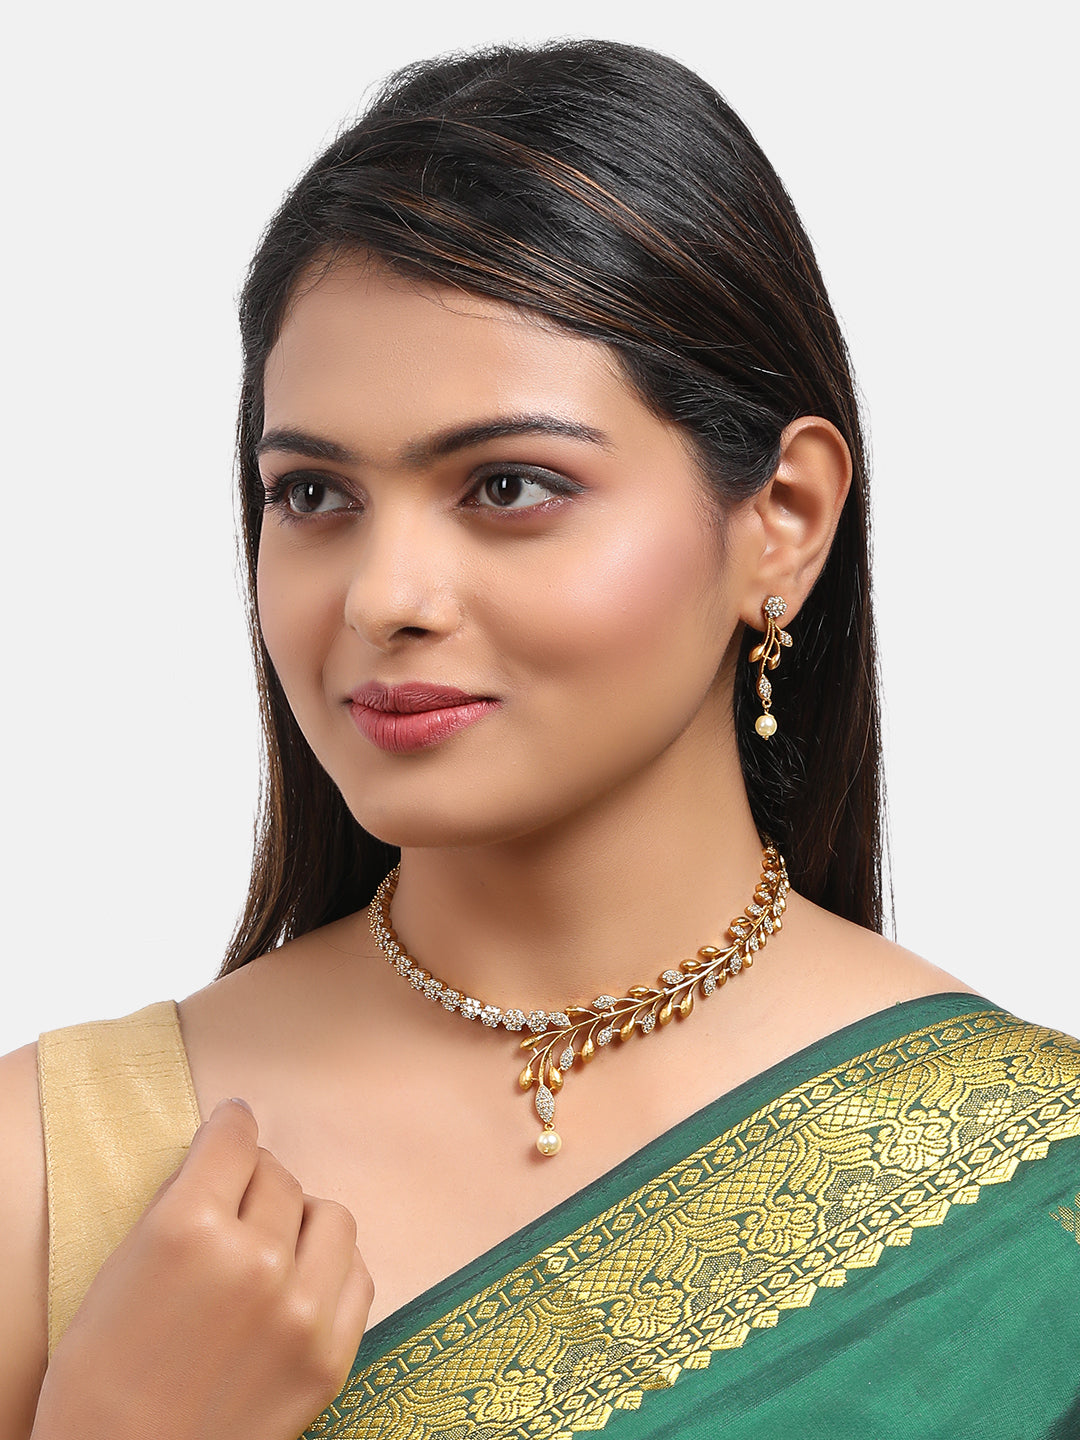 Premium Quality Short necklace set with Navratna stones Stones 5837N